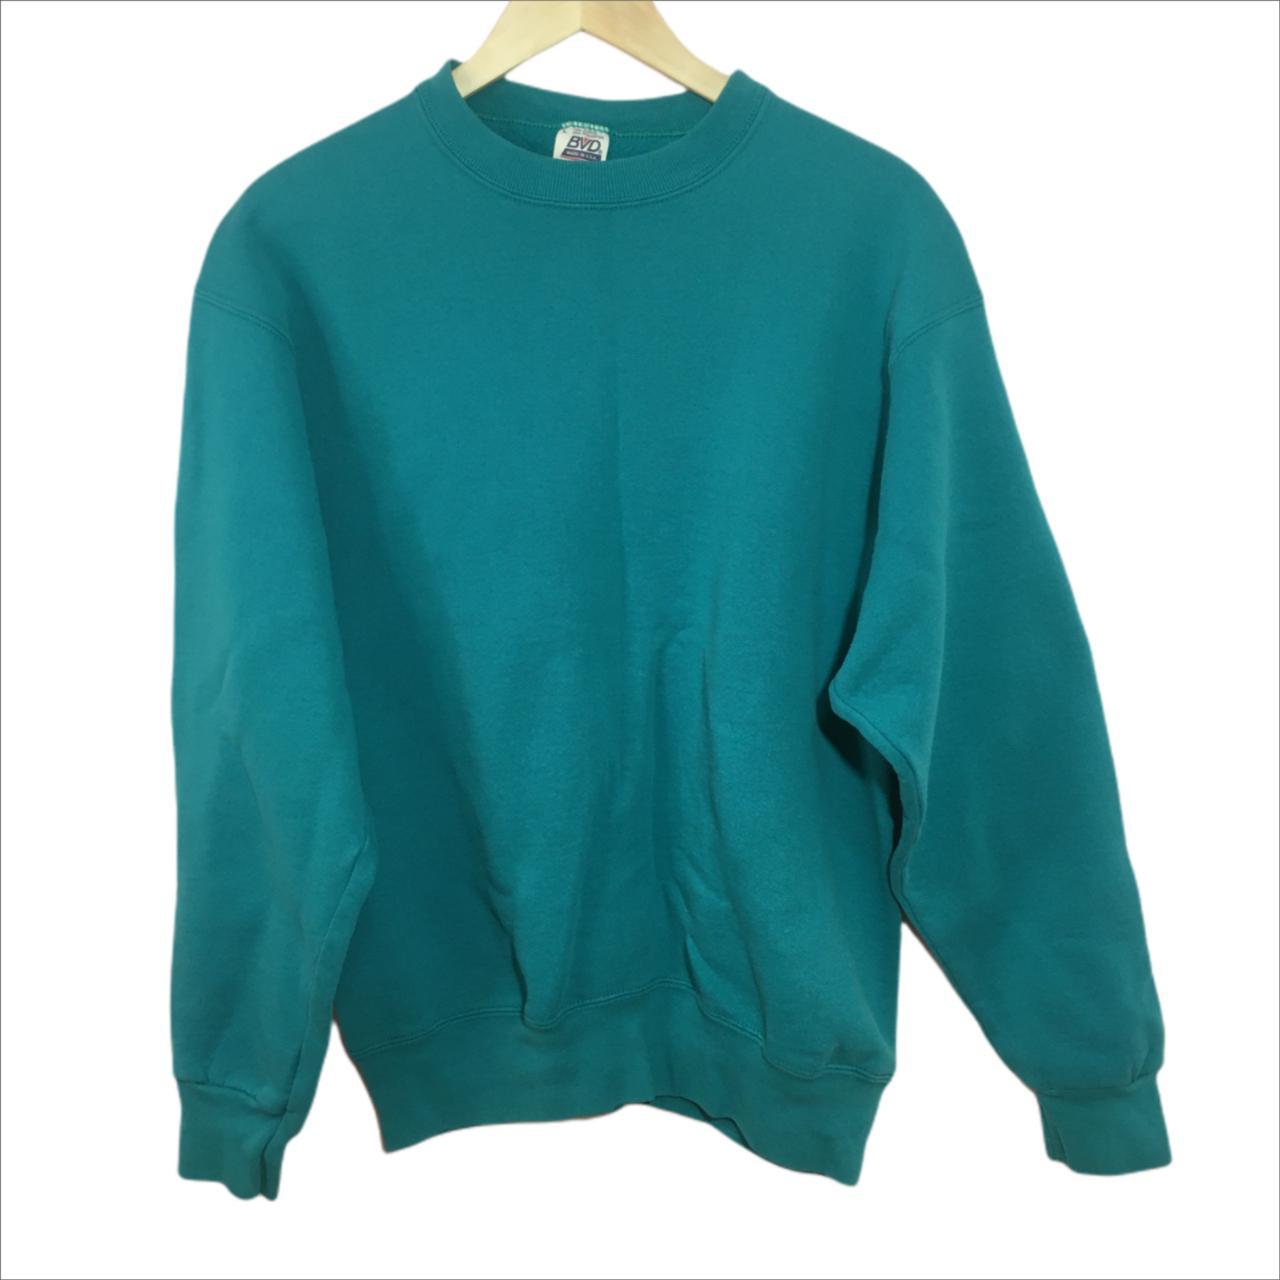 American Vintage Men's Green and Blue Sweatshirt